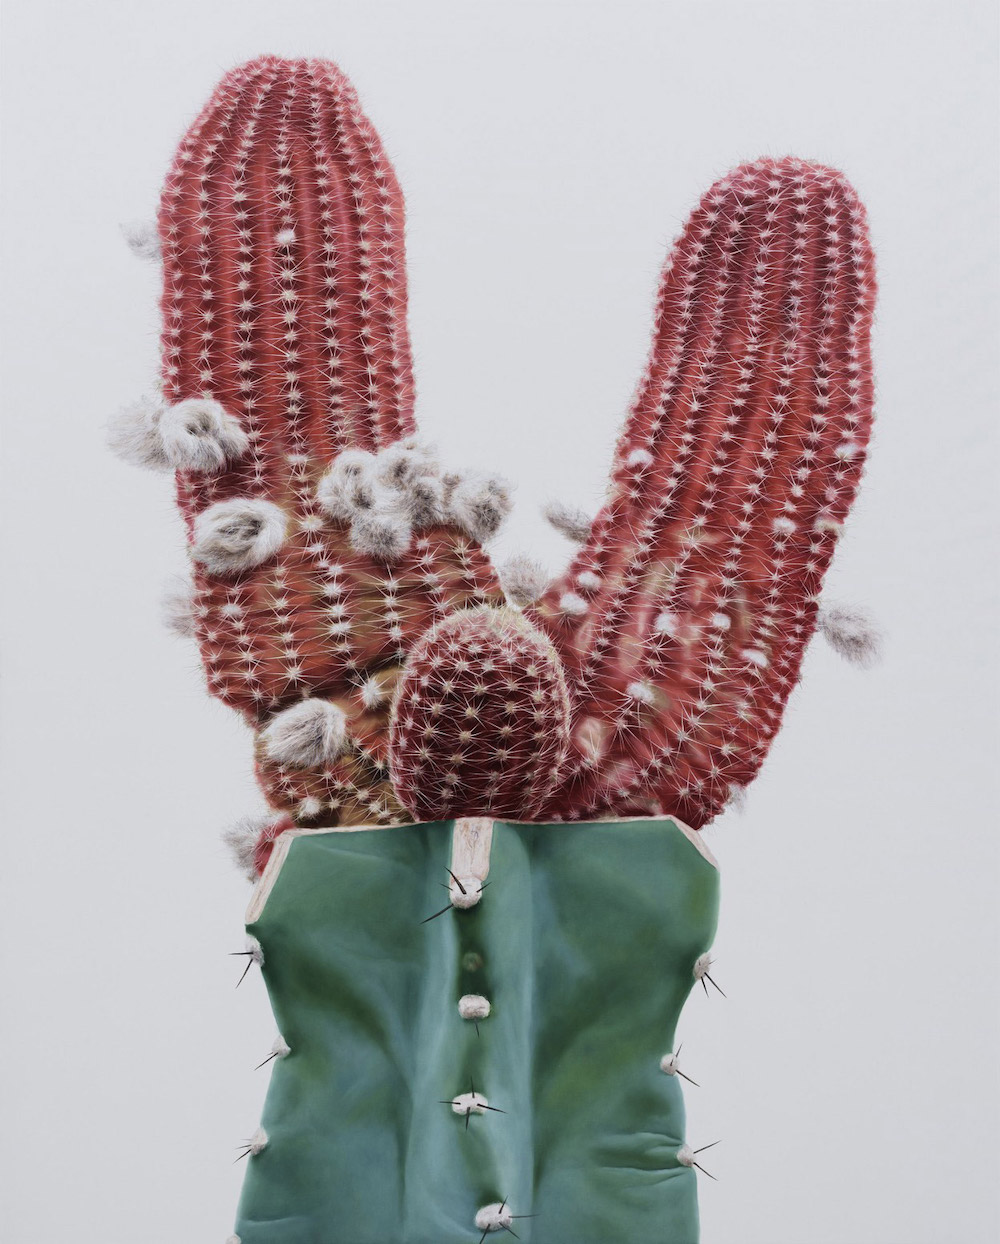 Kwang-ho Lee Brings Cacti to Life in His Giant Paintings003